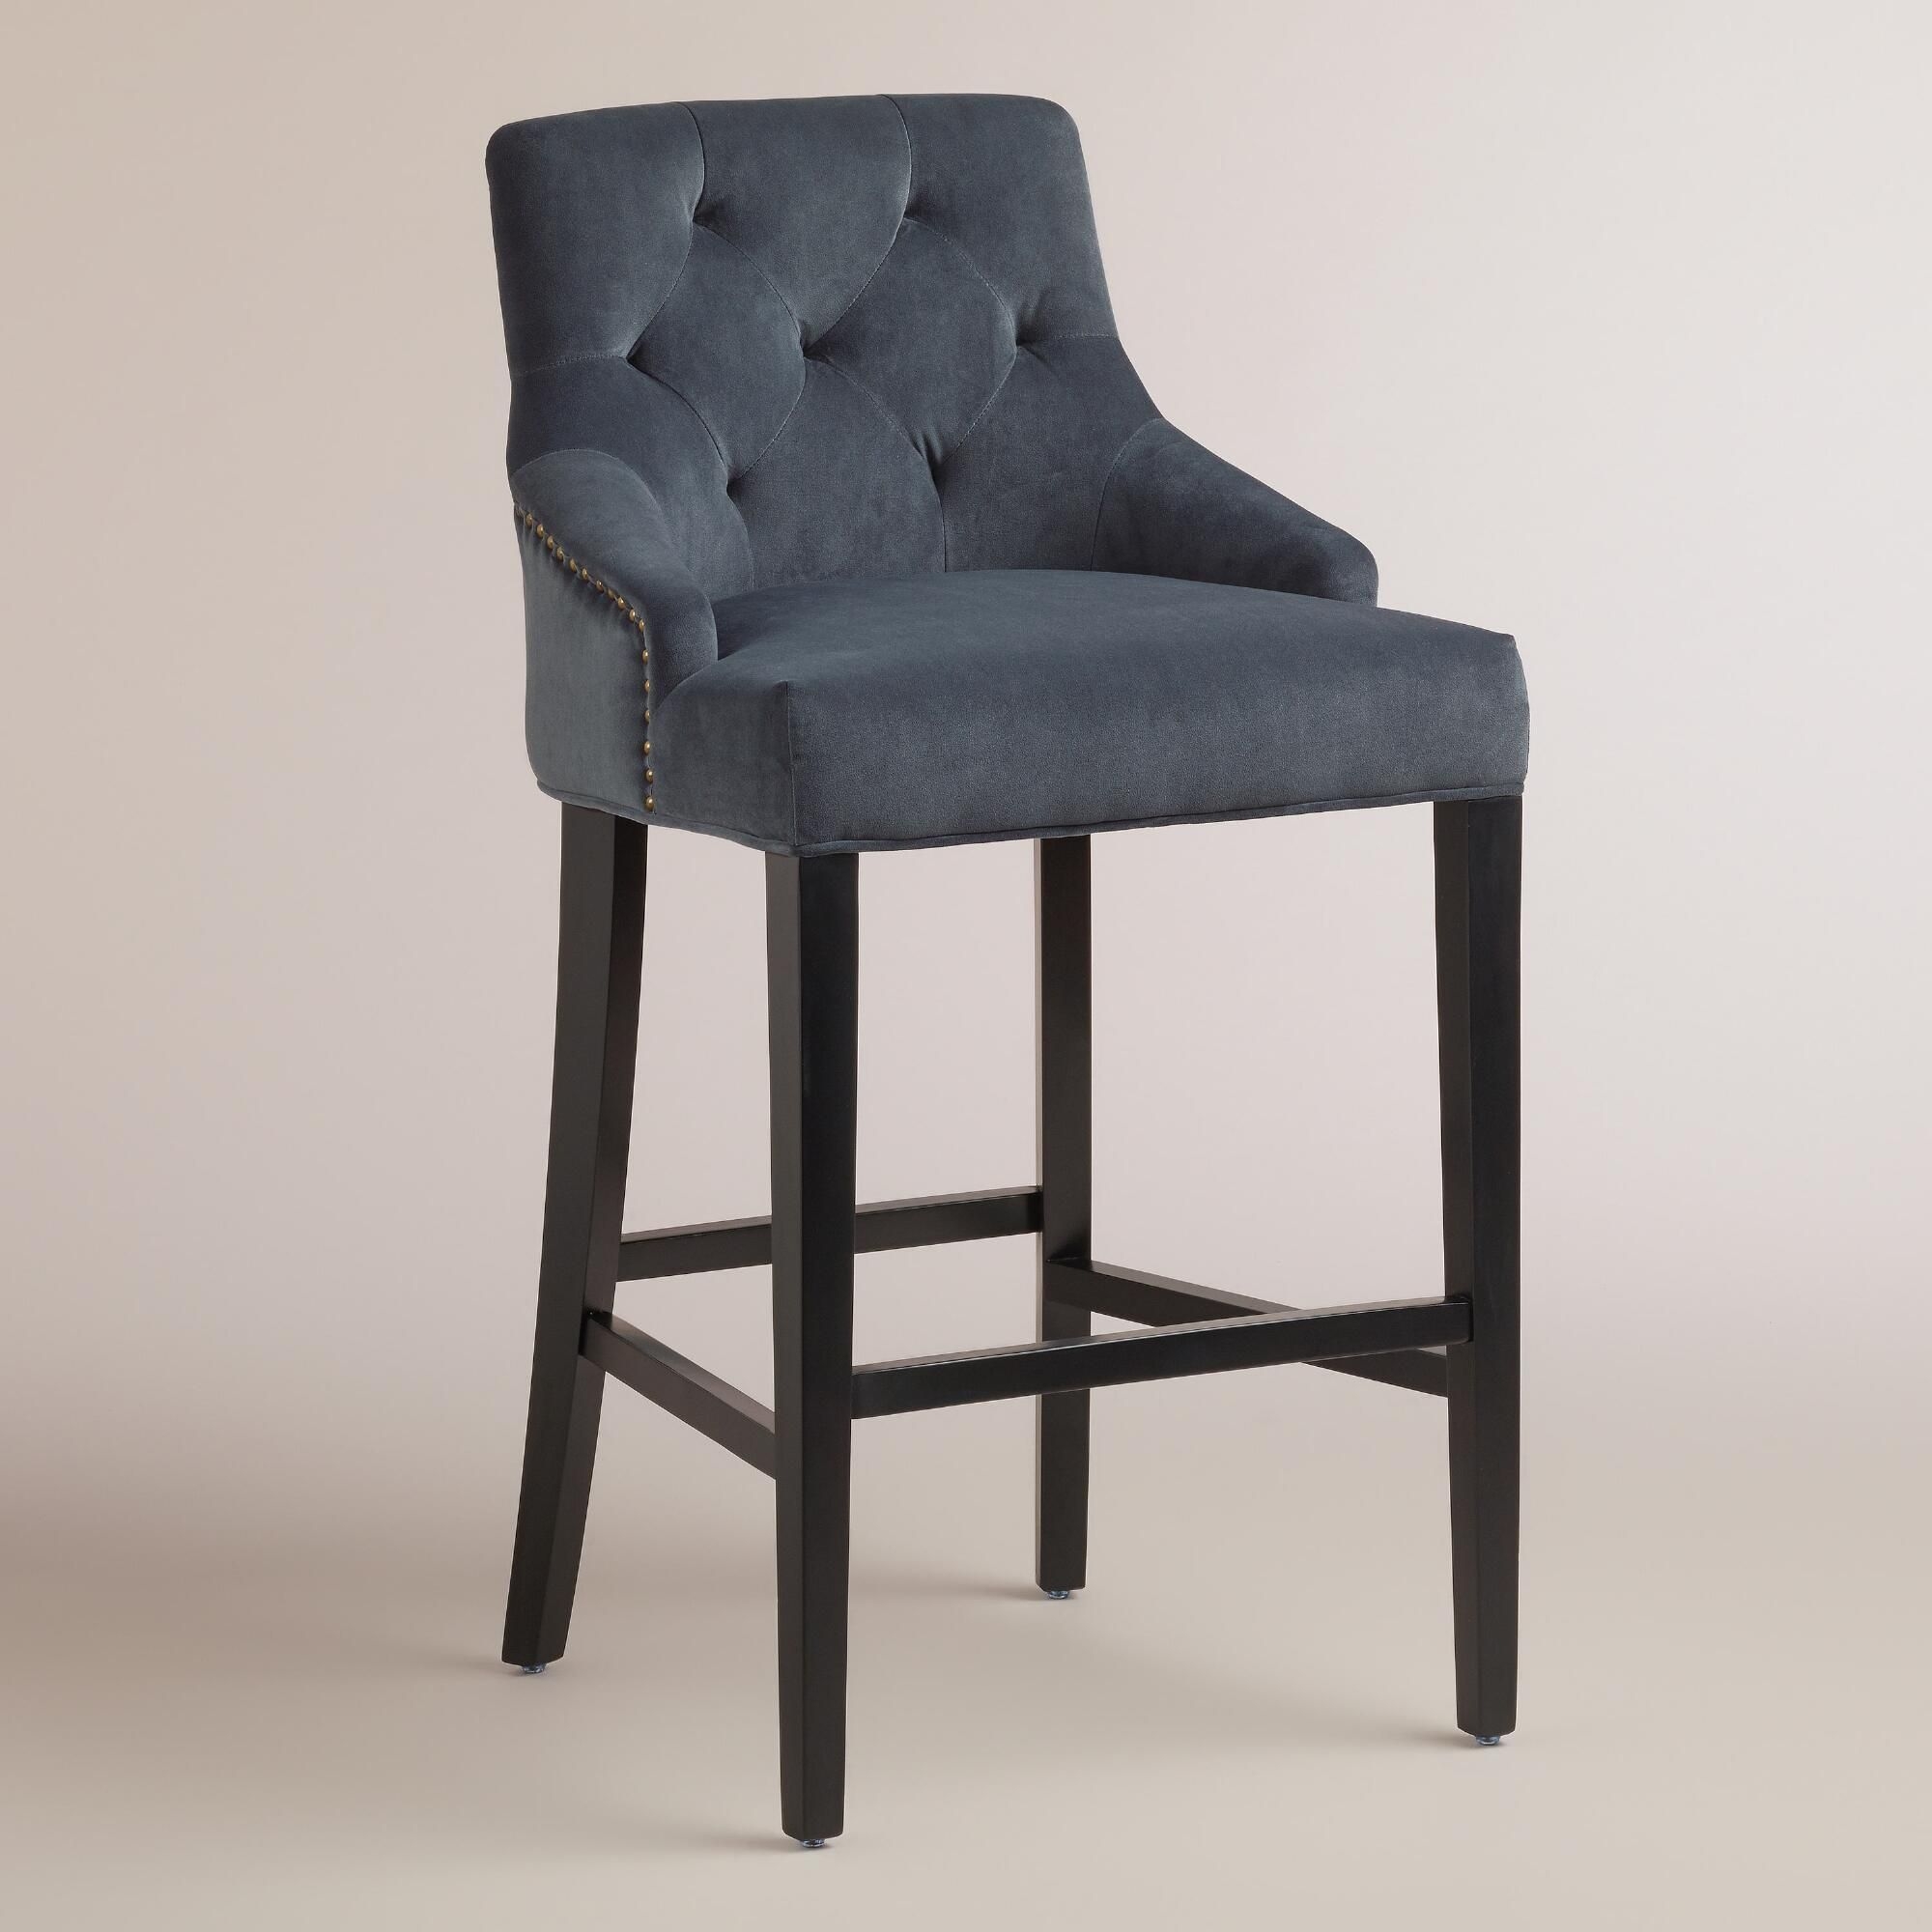 Fabric bar stools